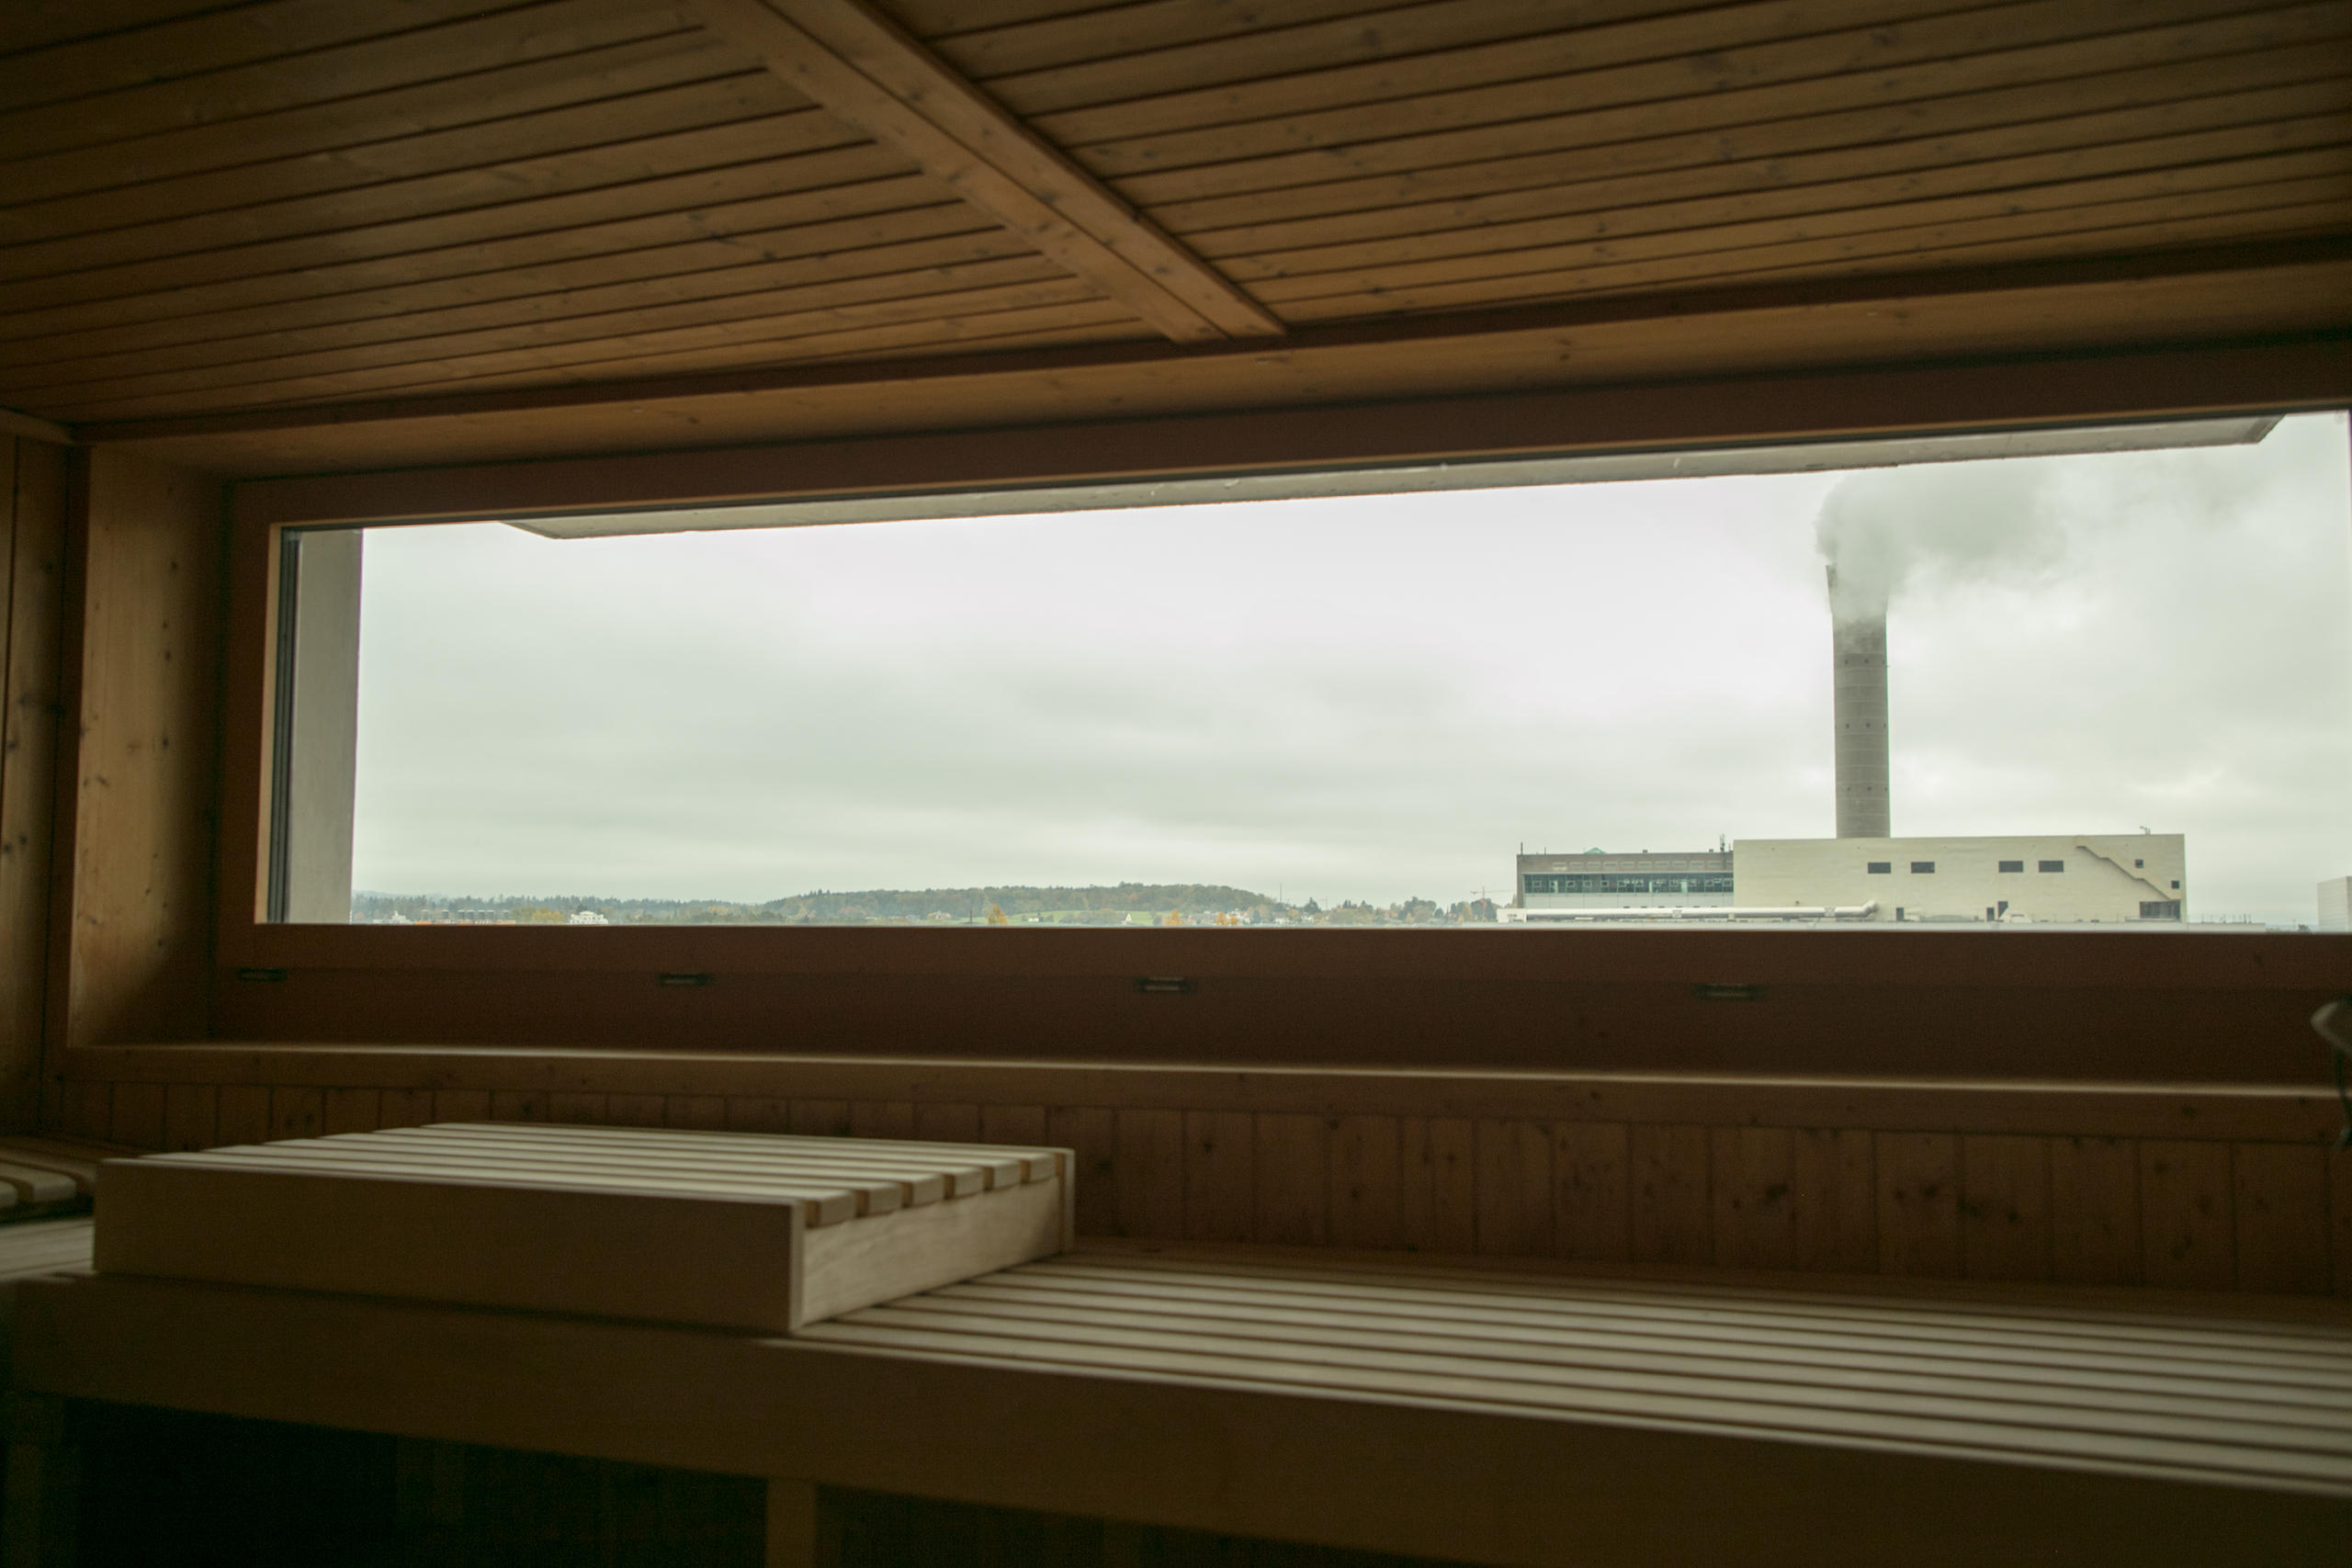 Vista desde la ventana de una sauna: una chimenea